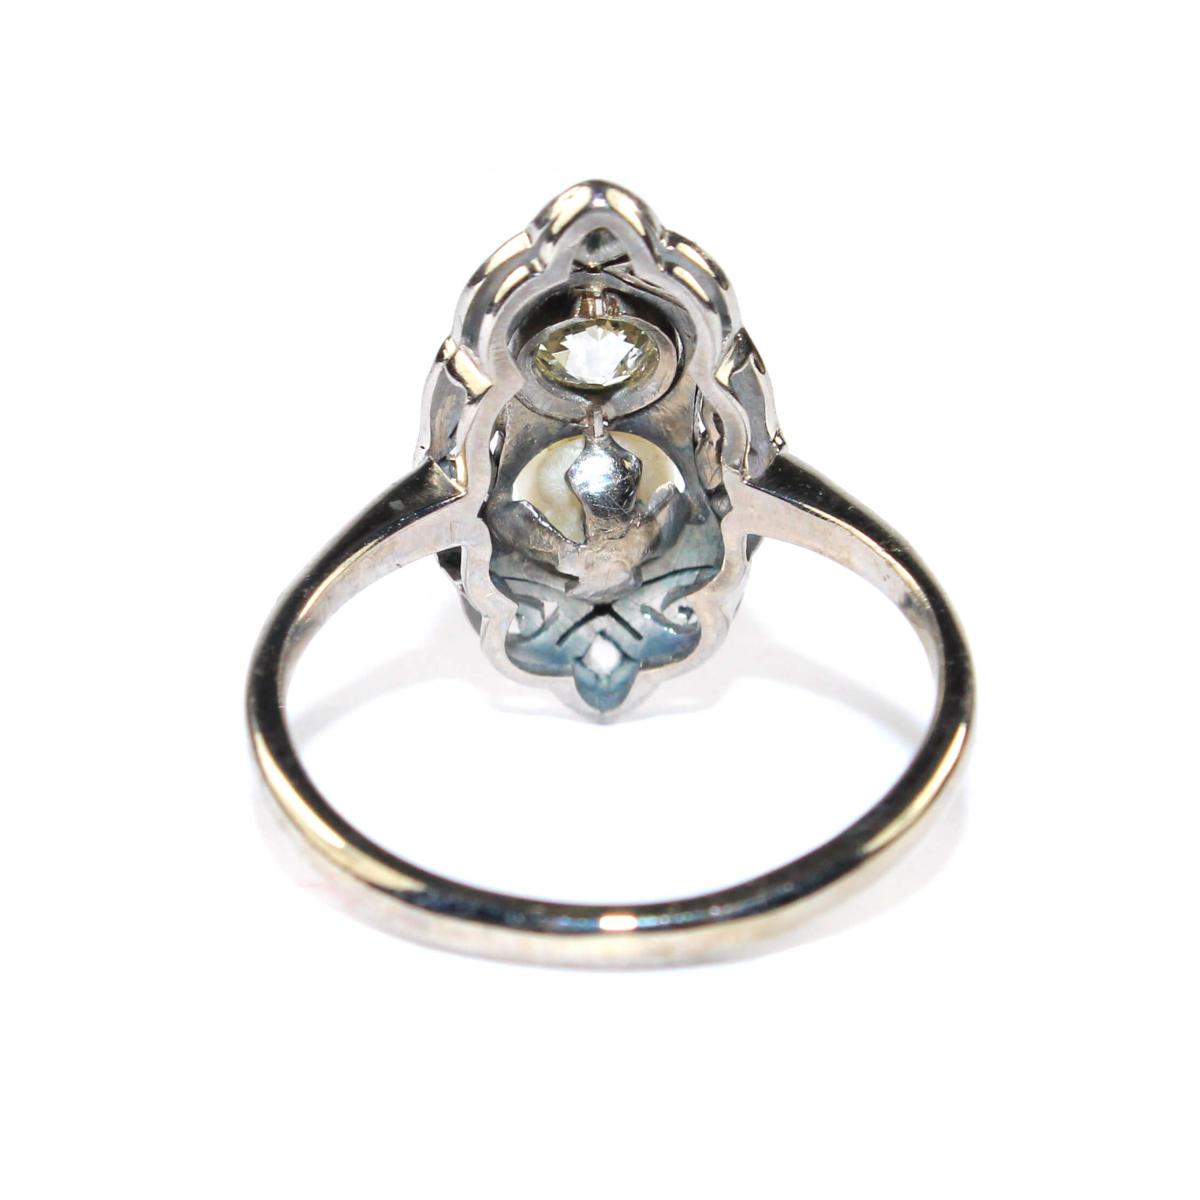 Art Deco Pearl and Diamond Marquise Ring circa 1935